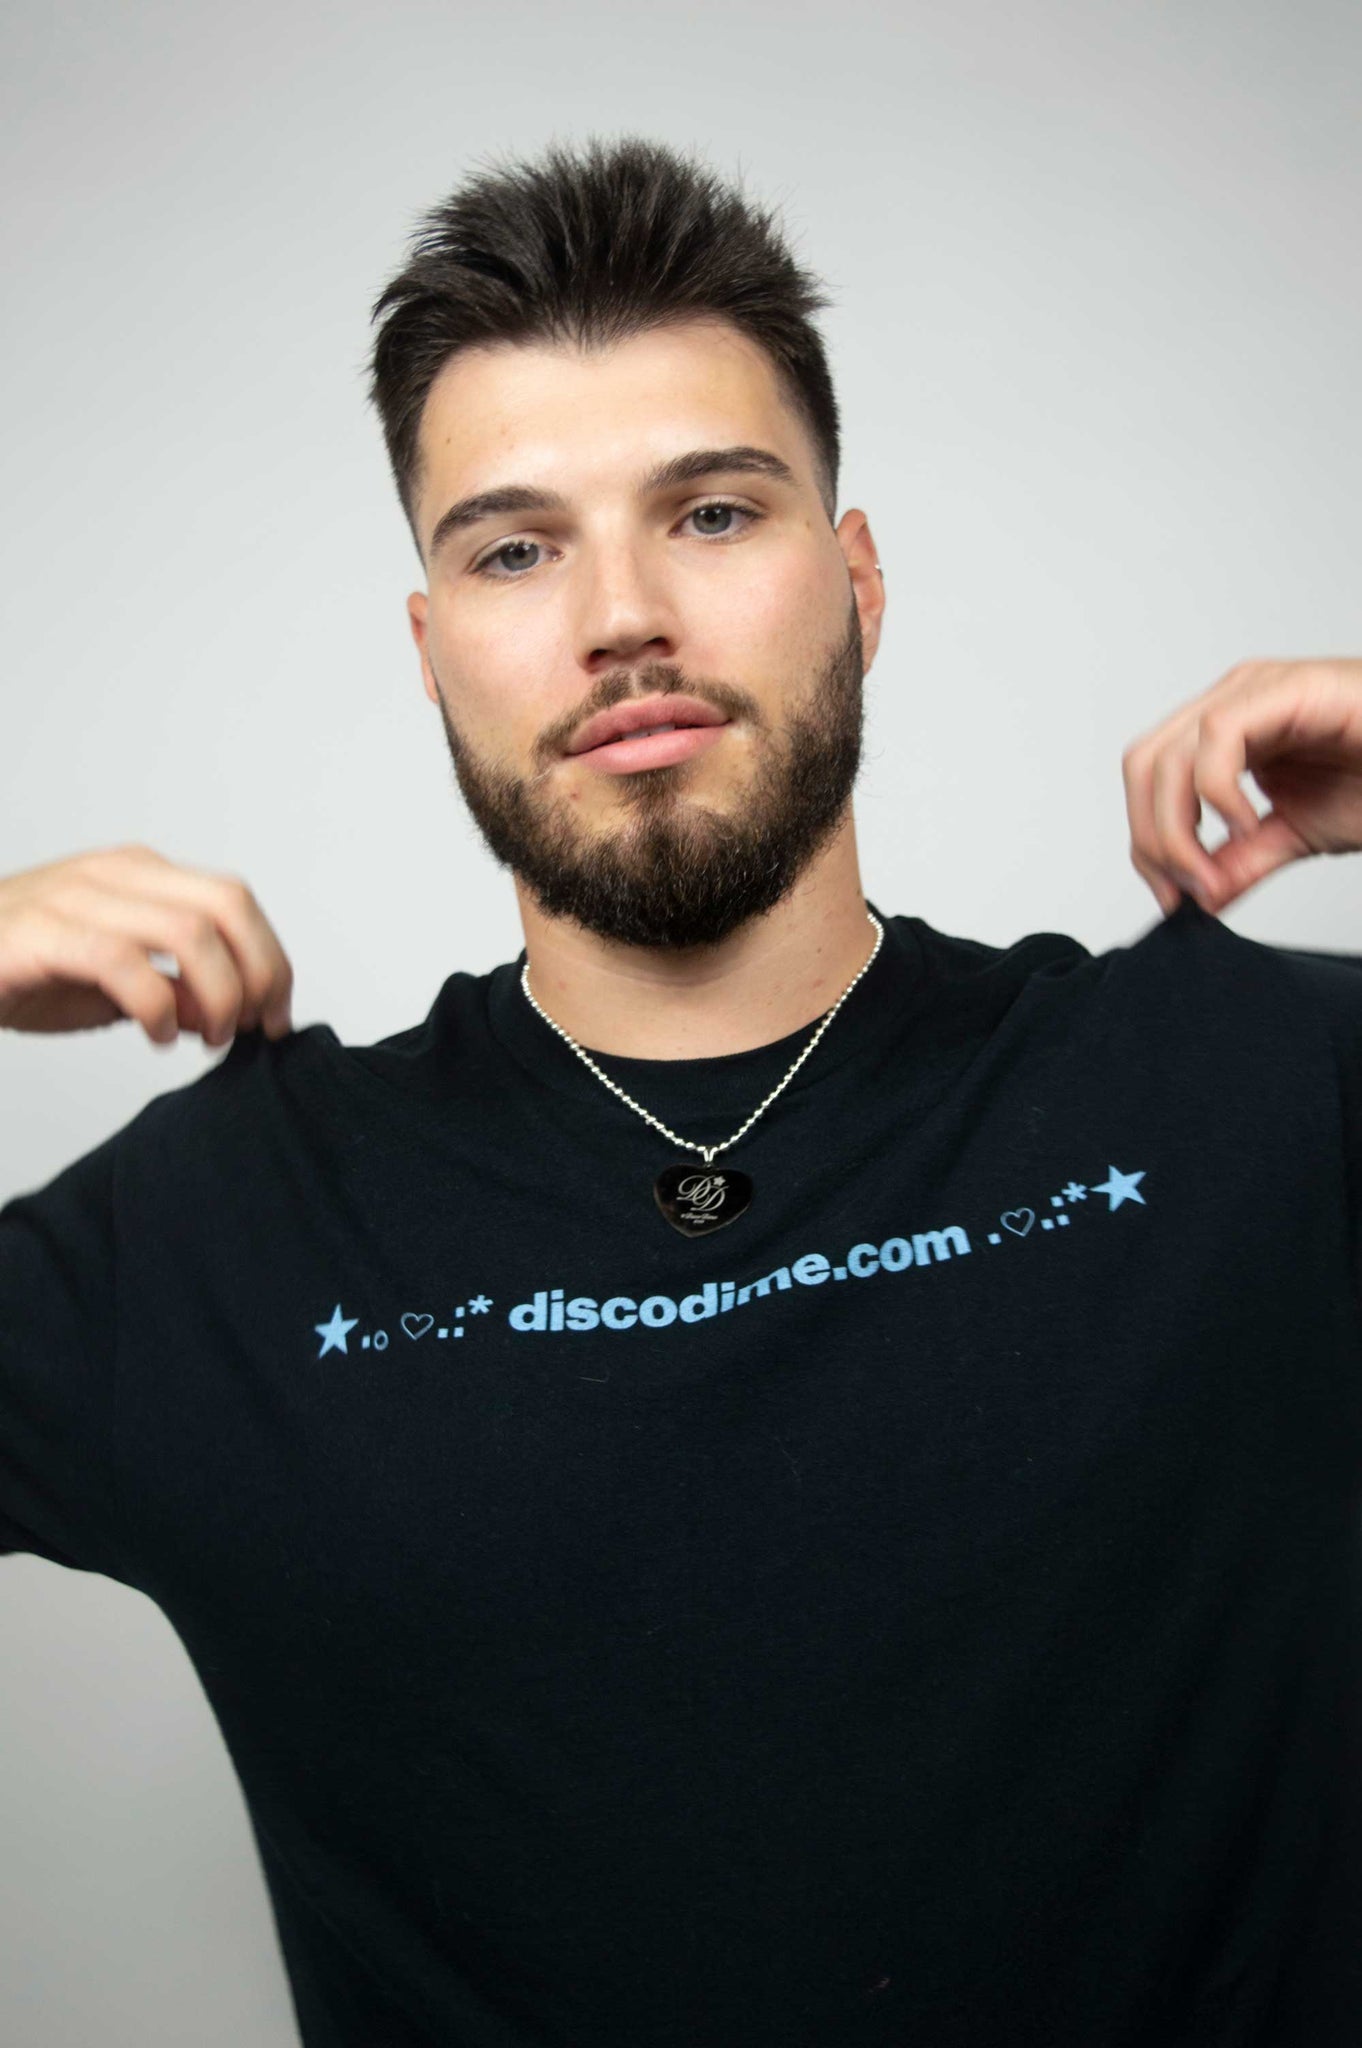 discodime.com Unisex T-Shirt (Blue/Black)